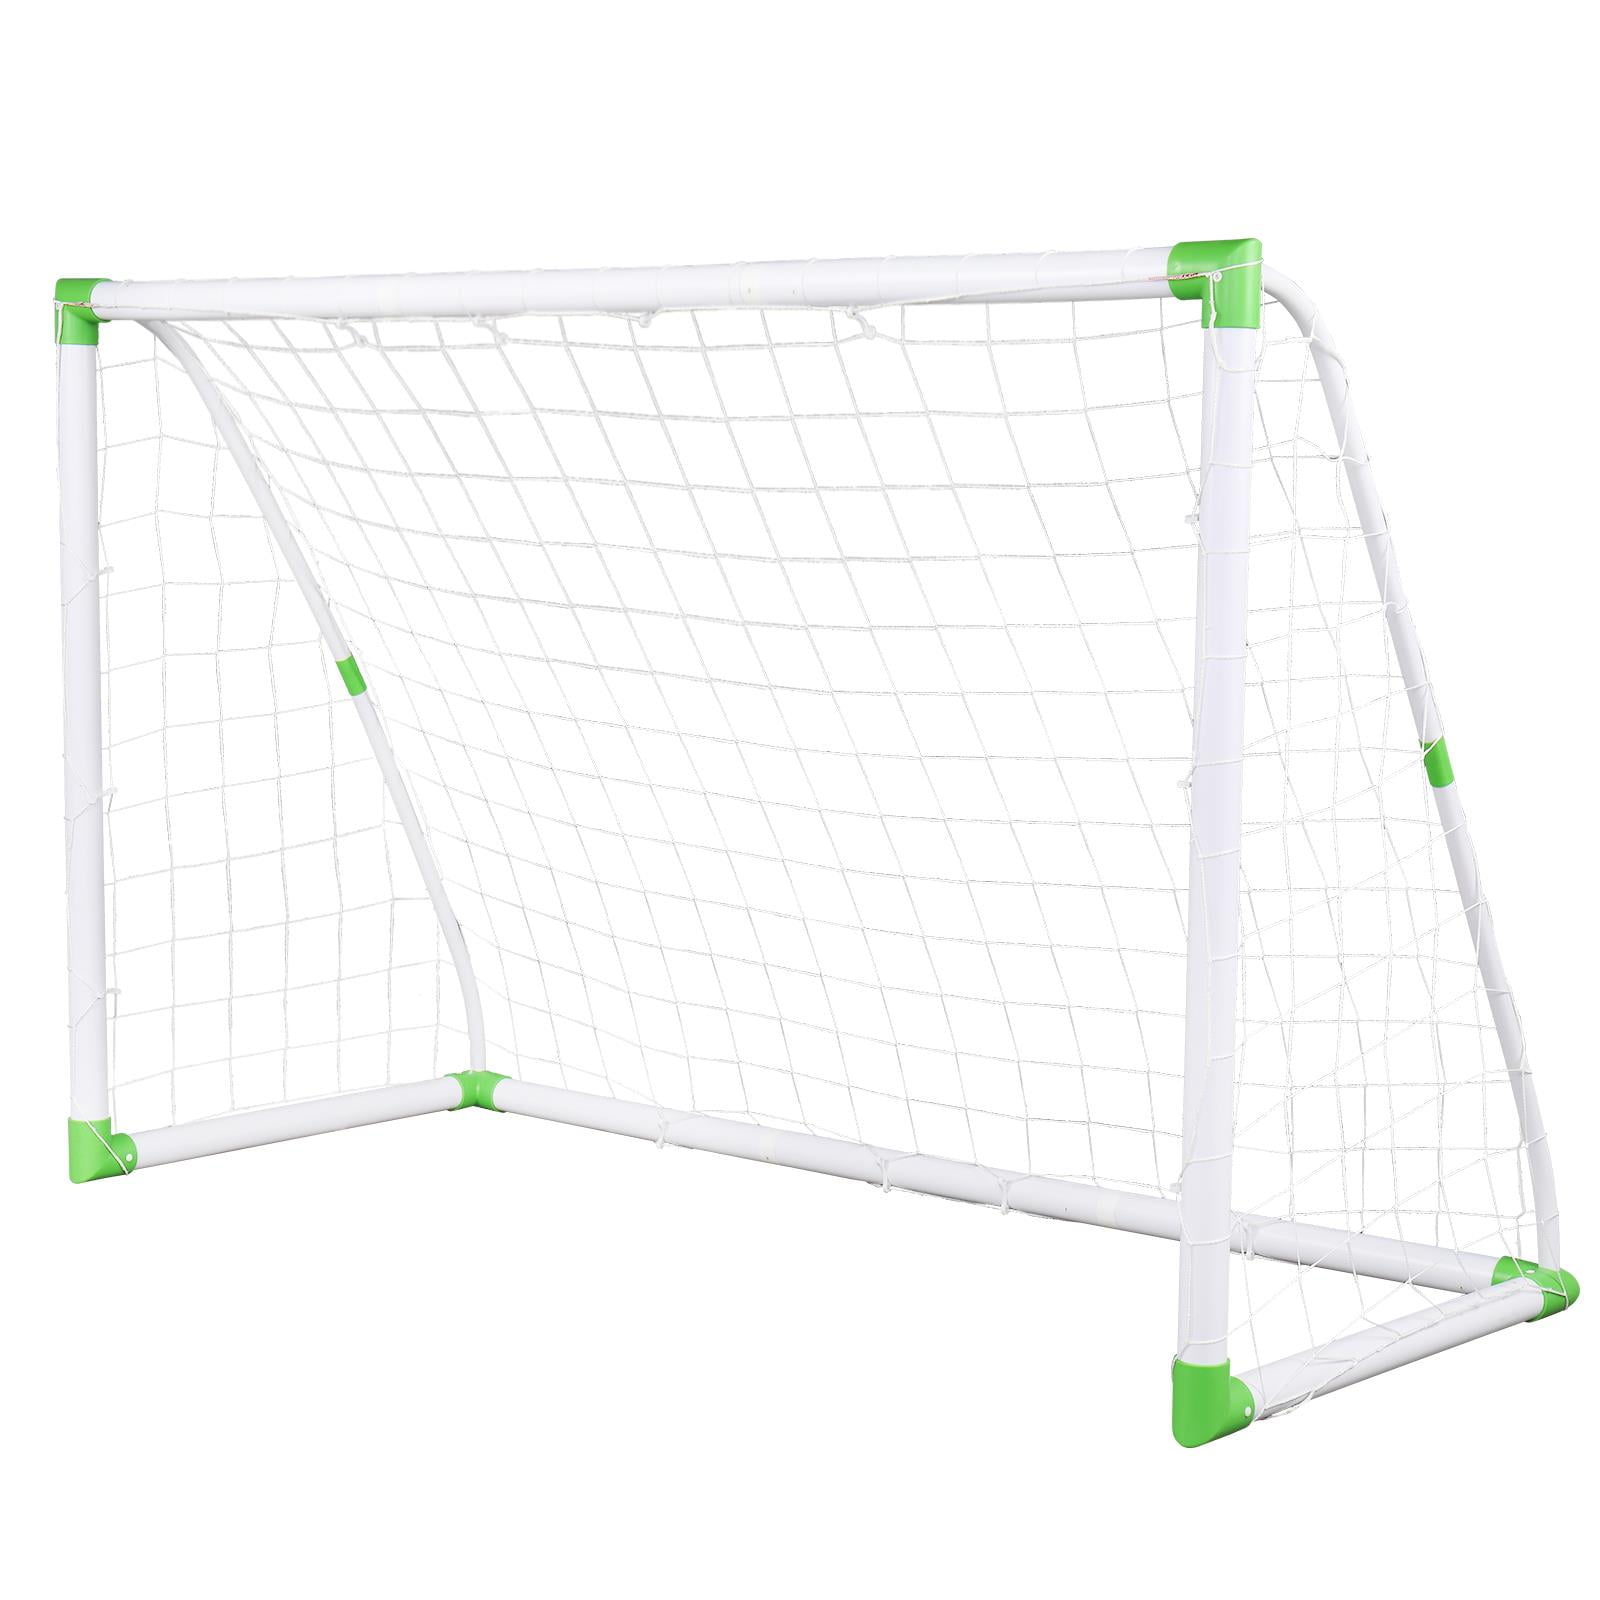 12x 6ft Football Net PE for Soccer Goal Post Junior Sports Training Outdoor US 